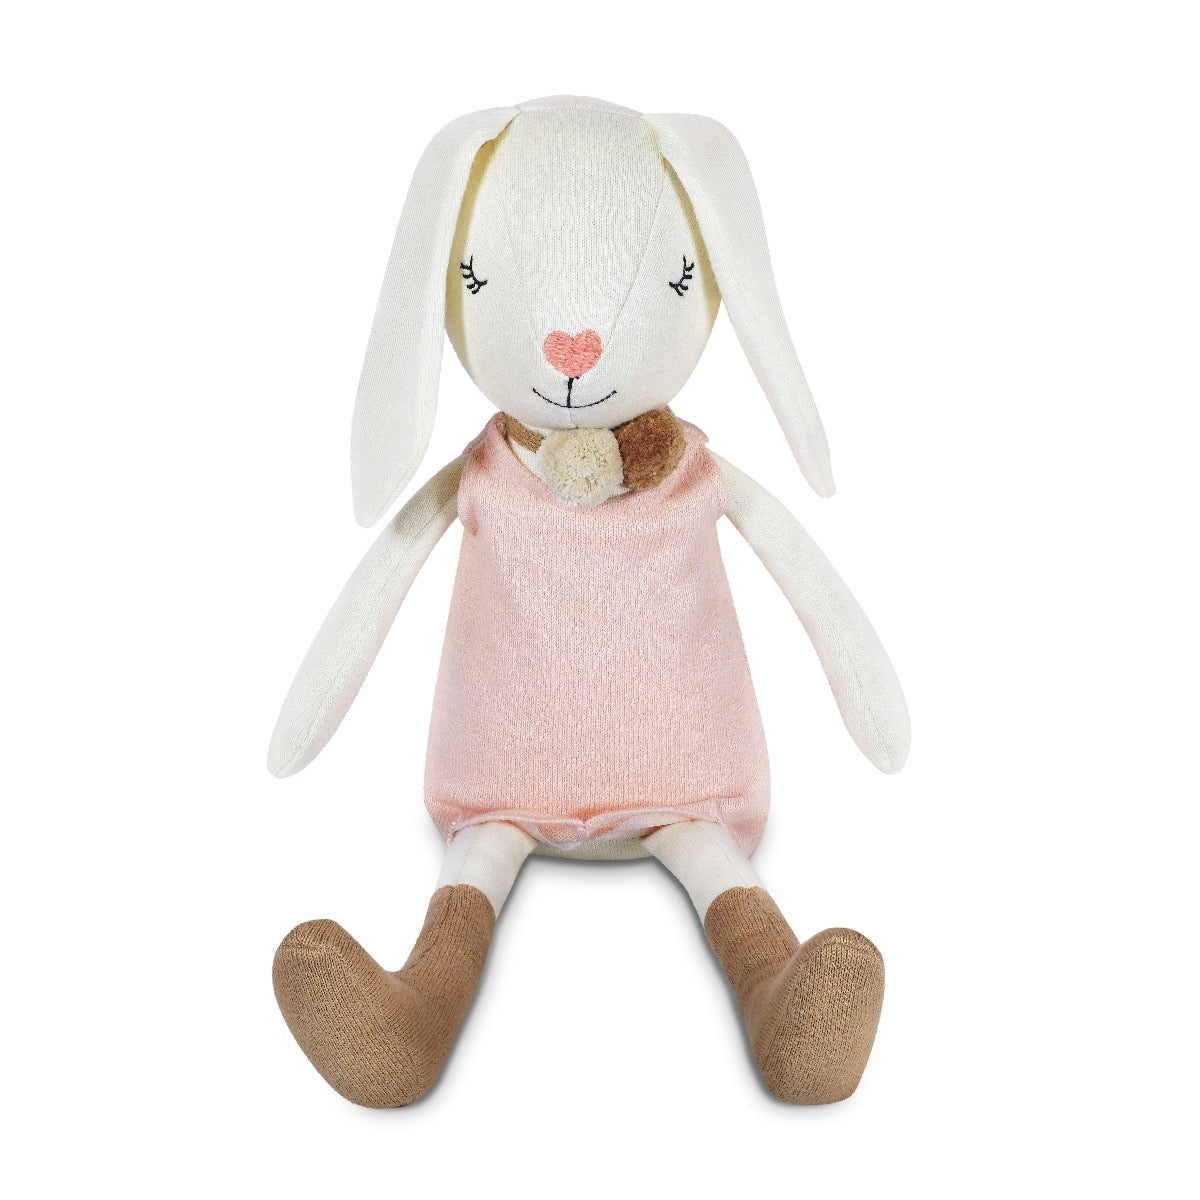 Knit Bunny Plush - Charlotte